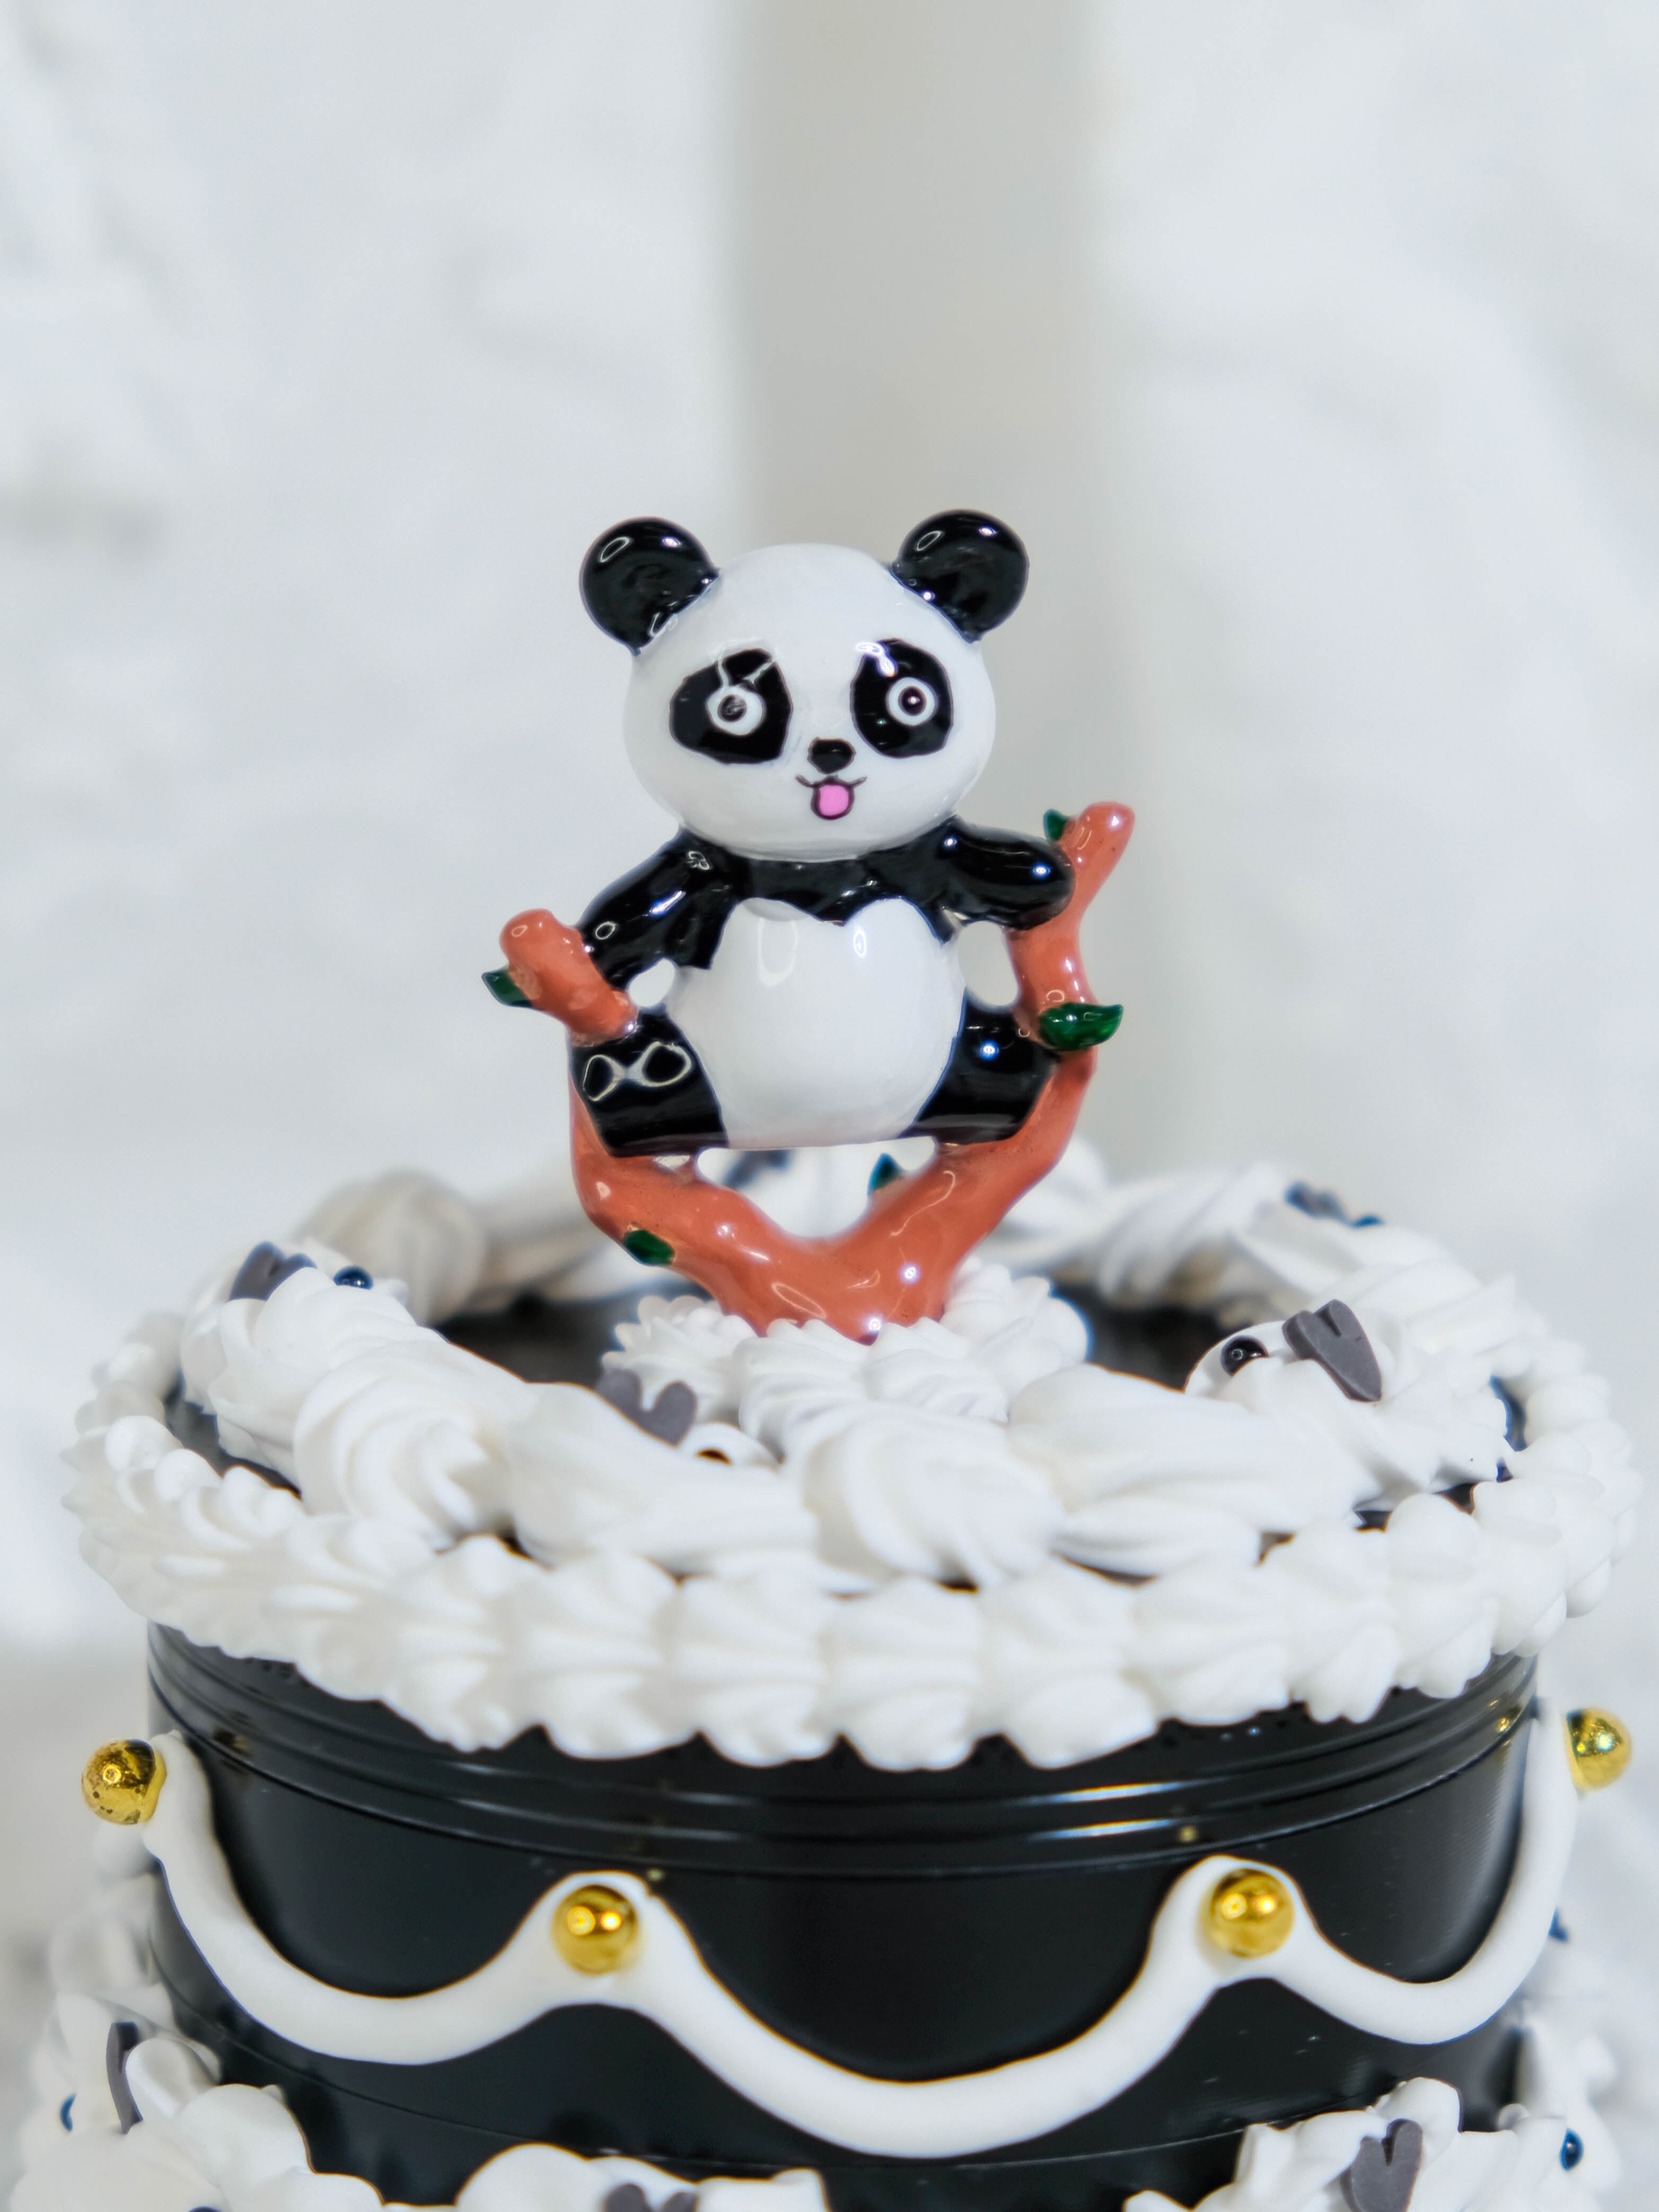 panda chocolate cake by bakisto - the cake company